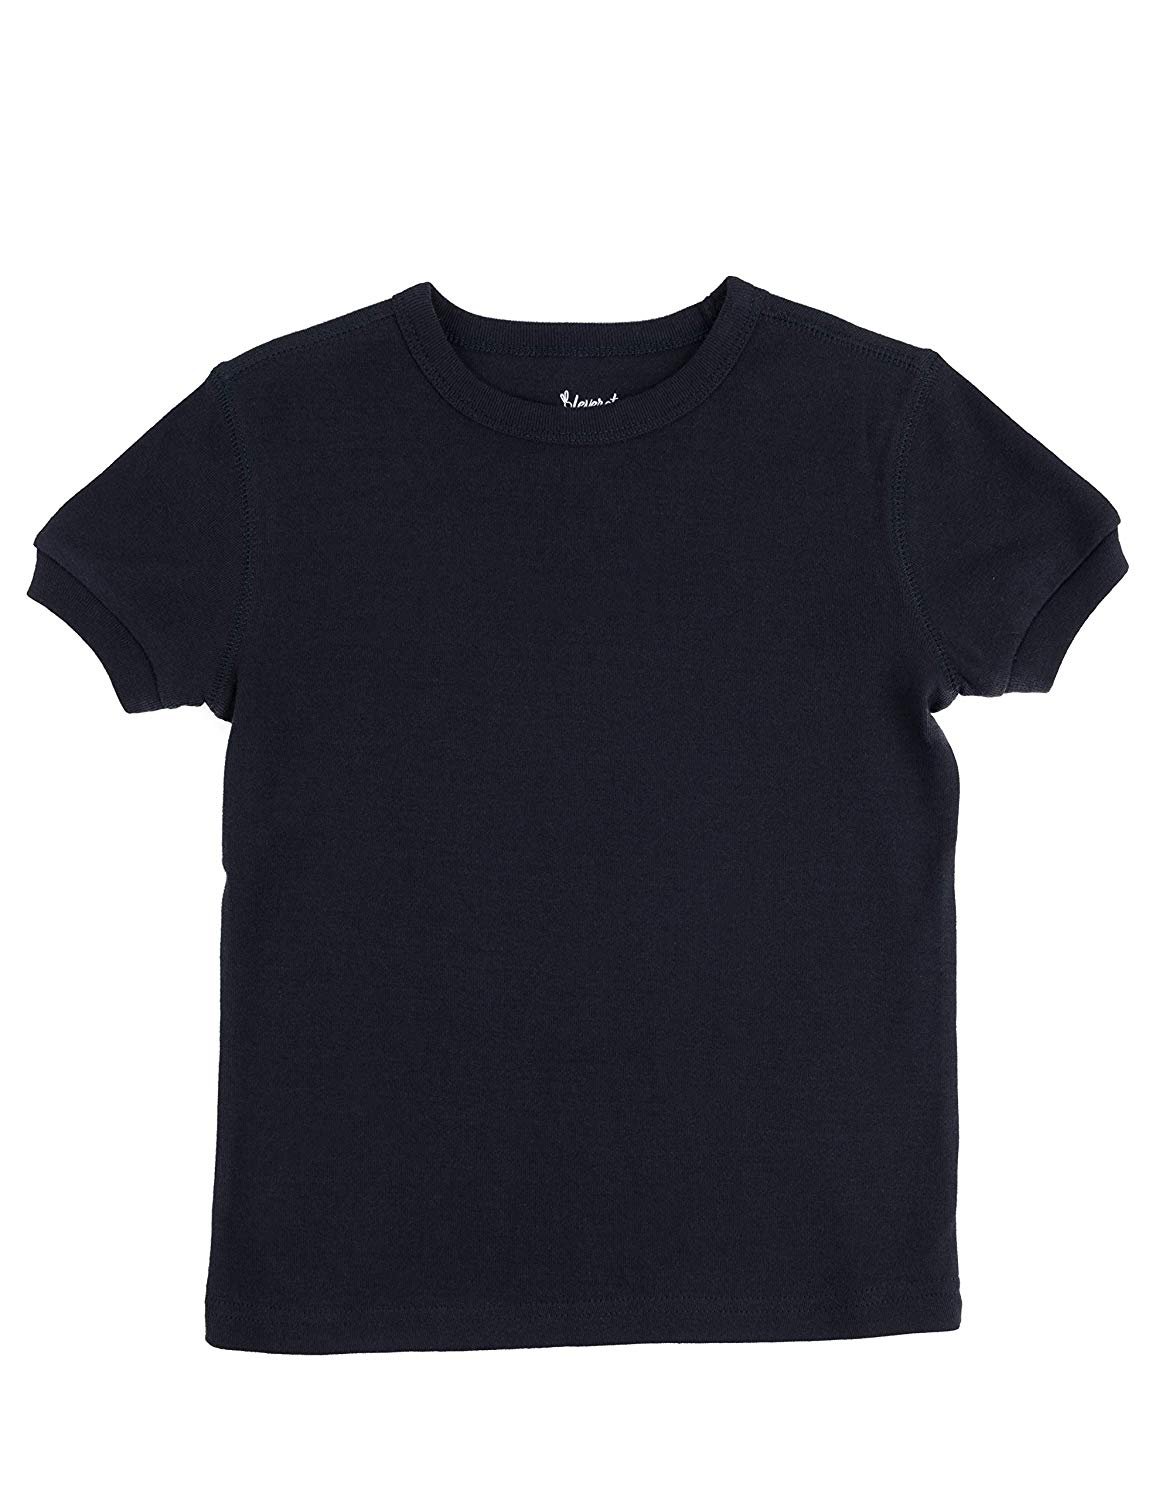 Leveret Short Sleeve Top Boys Girls Kids T-Shirt 100% Cotton (Dark Grey,Size 6 Years) - image 4 of 10